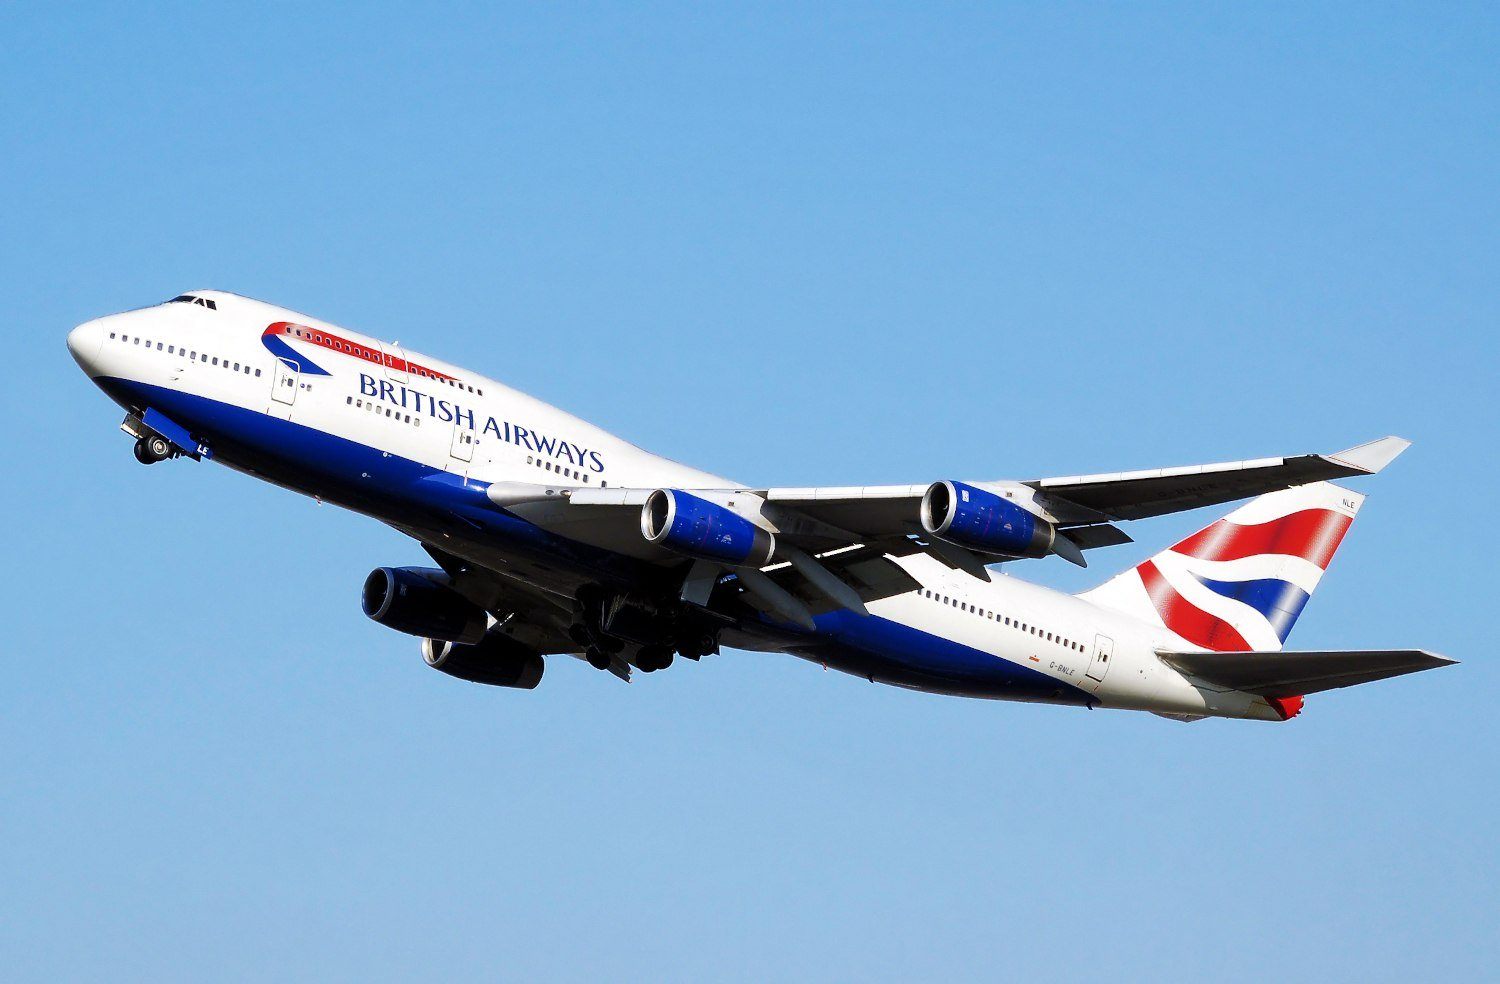 British Airways Boeing 747-400 taking off from London Heathrow Airport, England